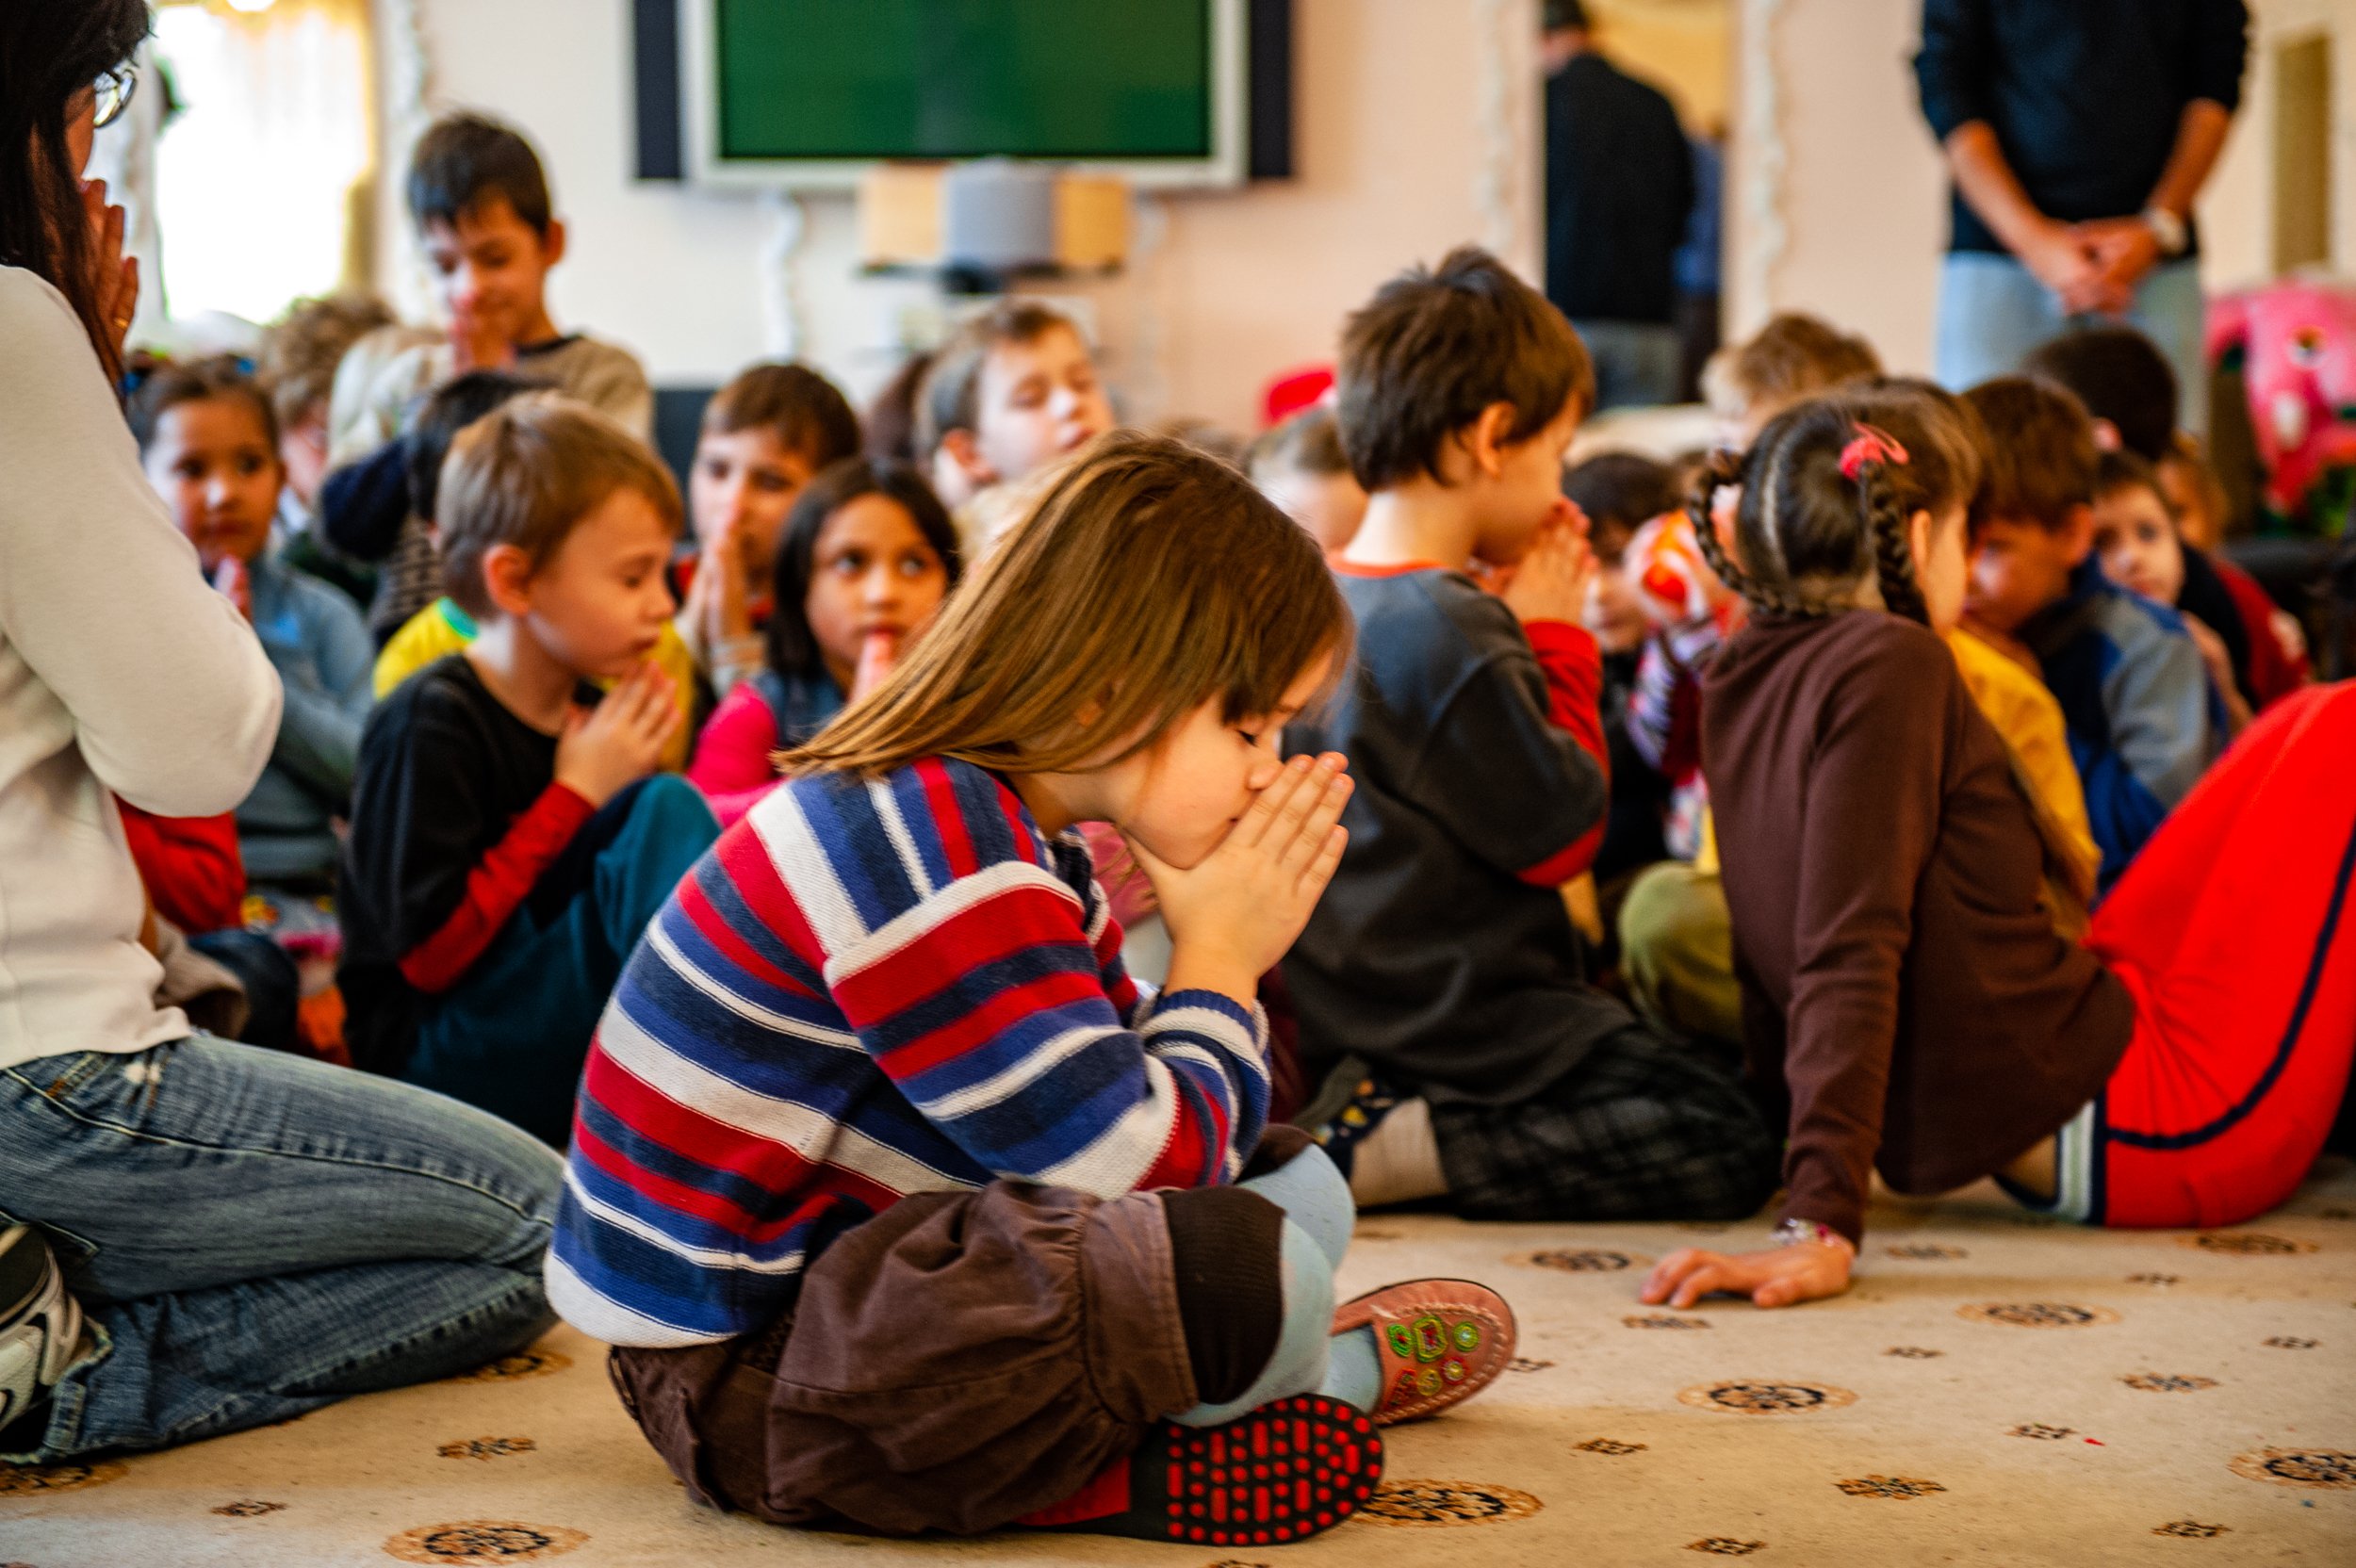 Ukrainian orphanage, children praying